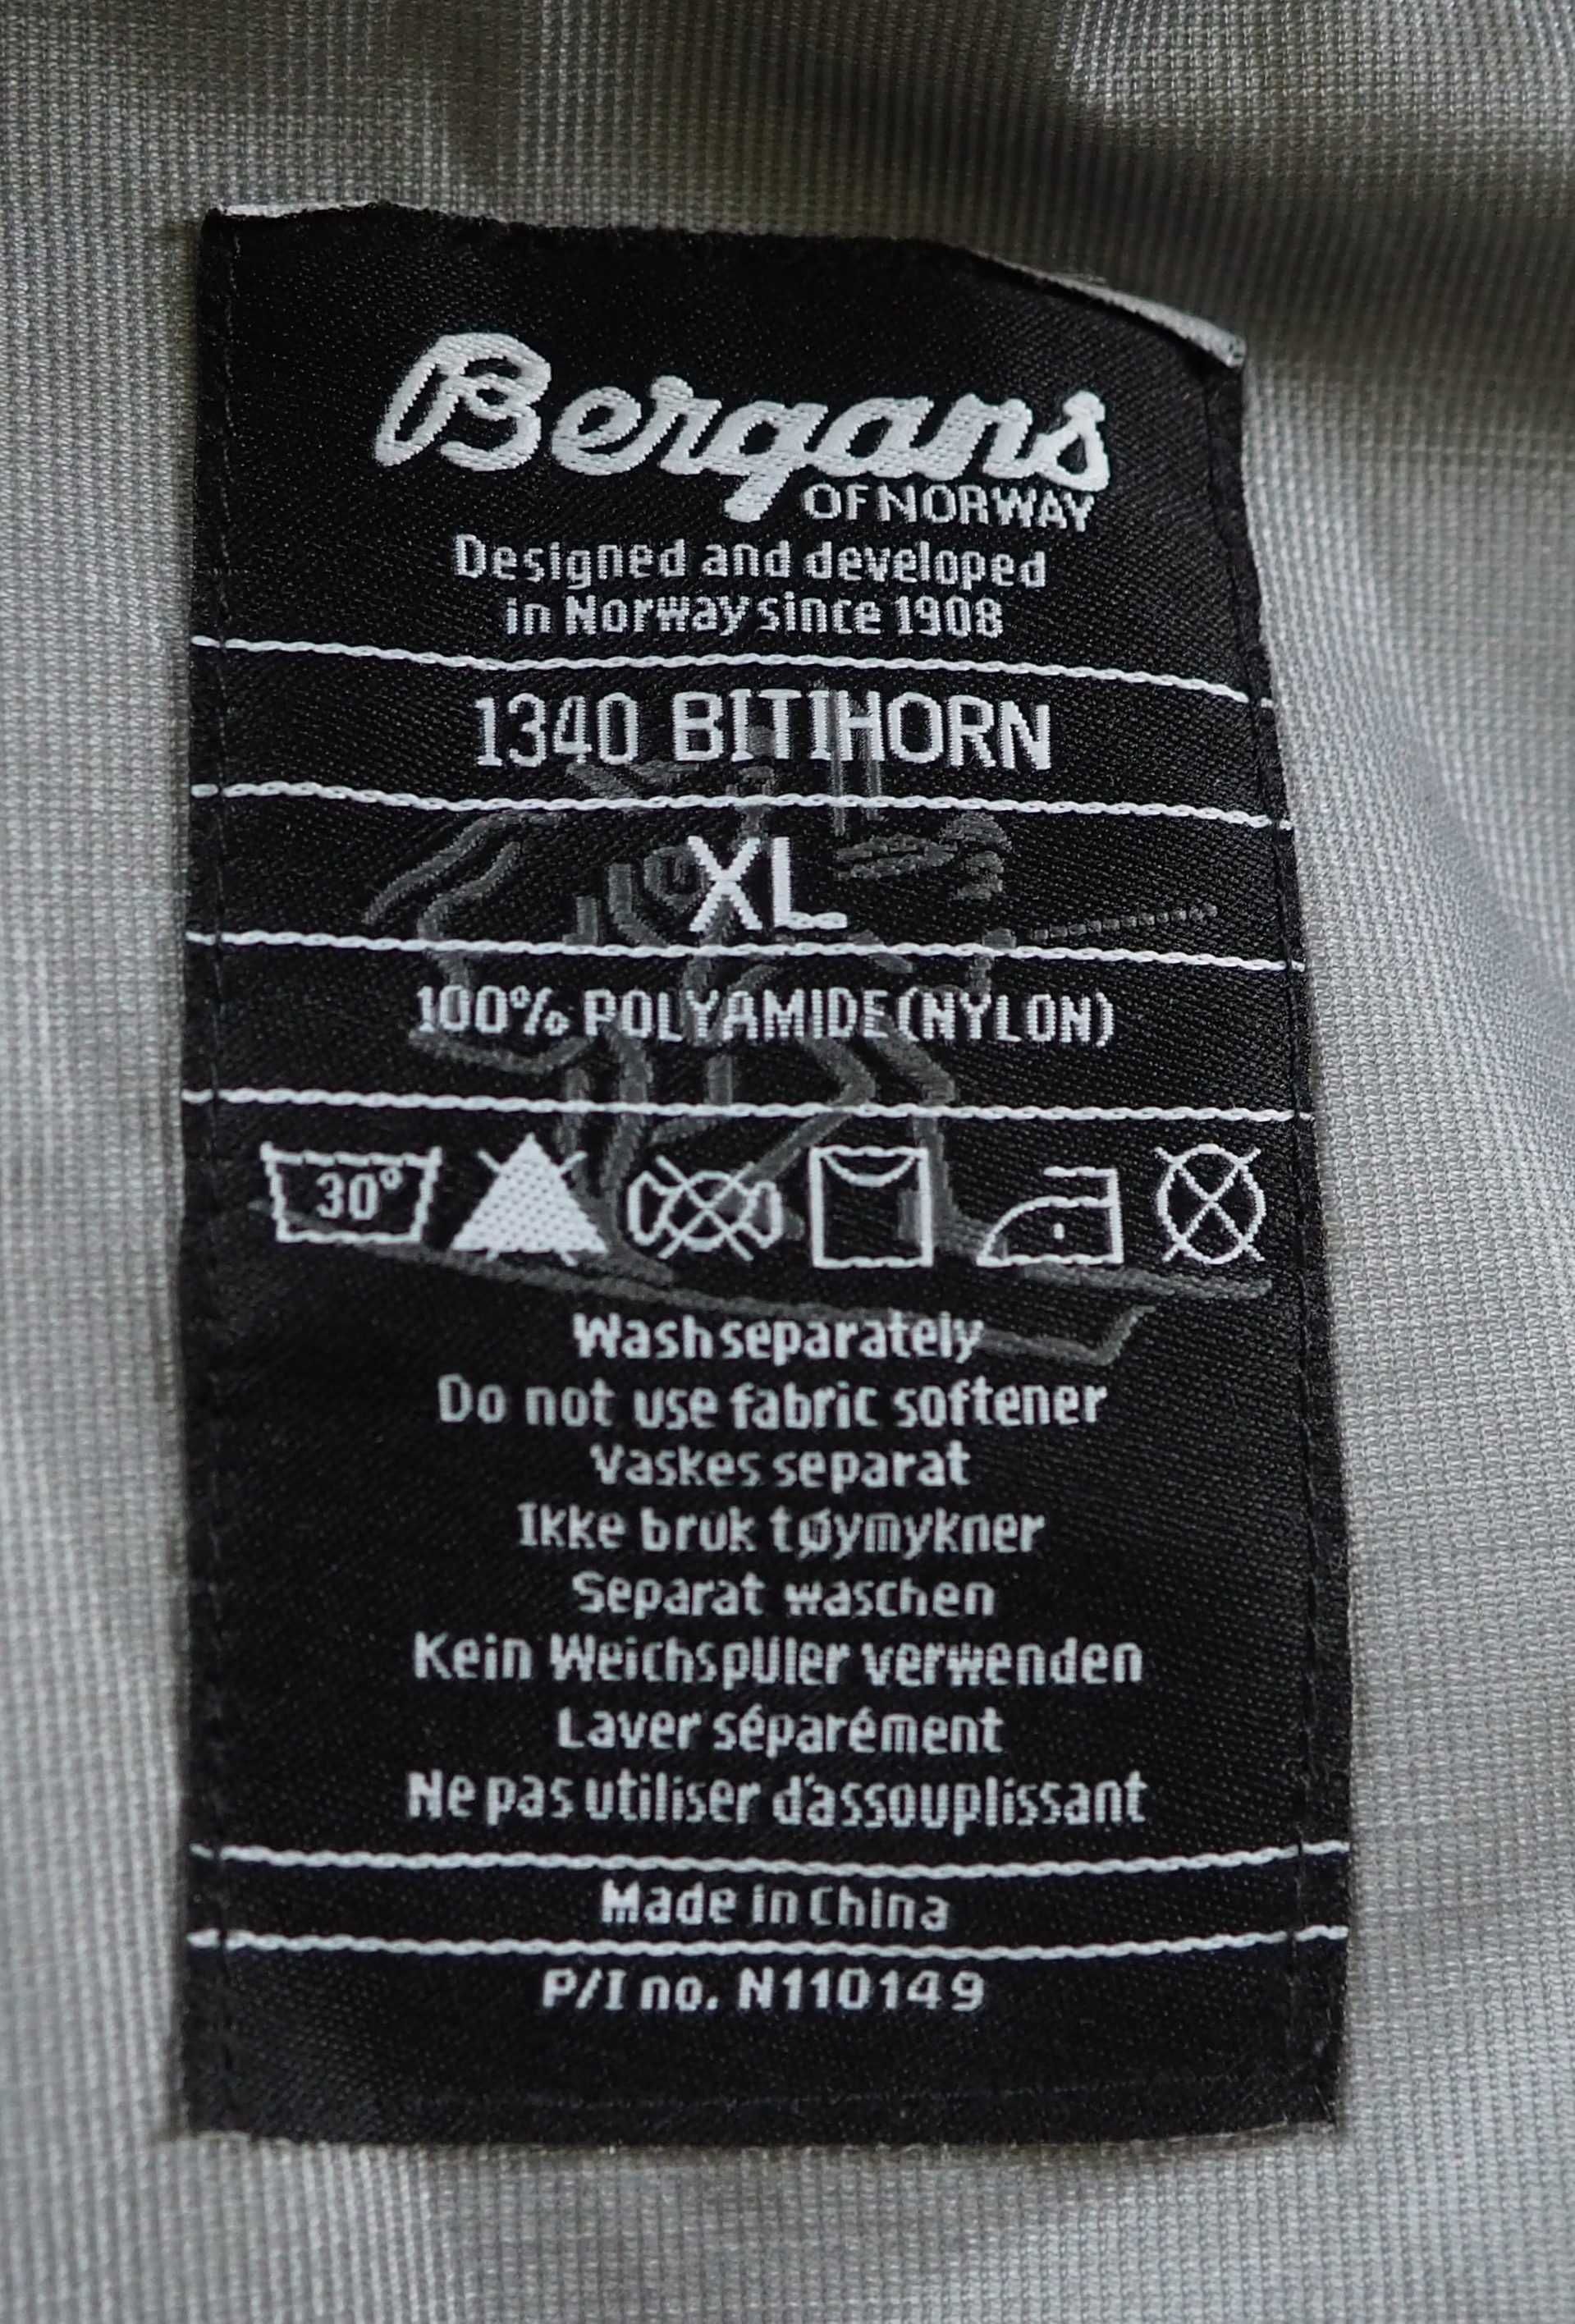 BERGANS_1340 Bitihorn_kurtka męska_wodoodporna_XL